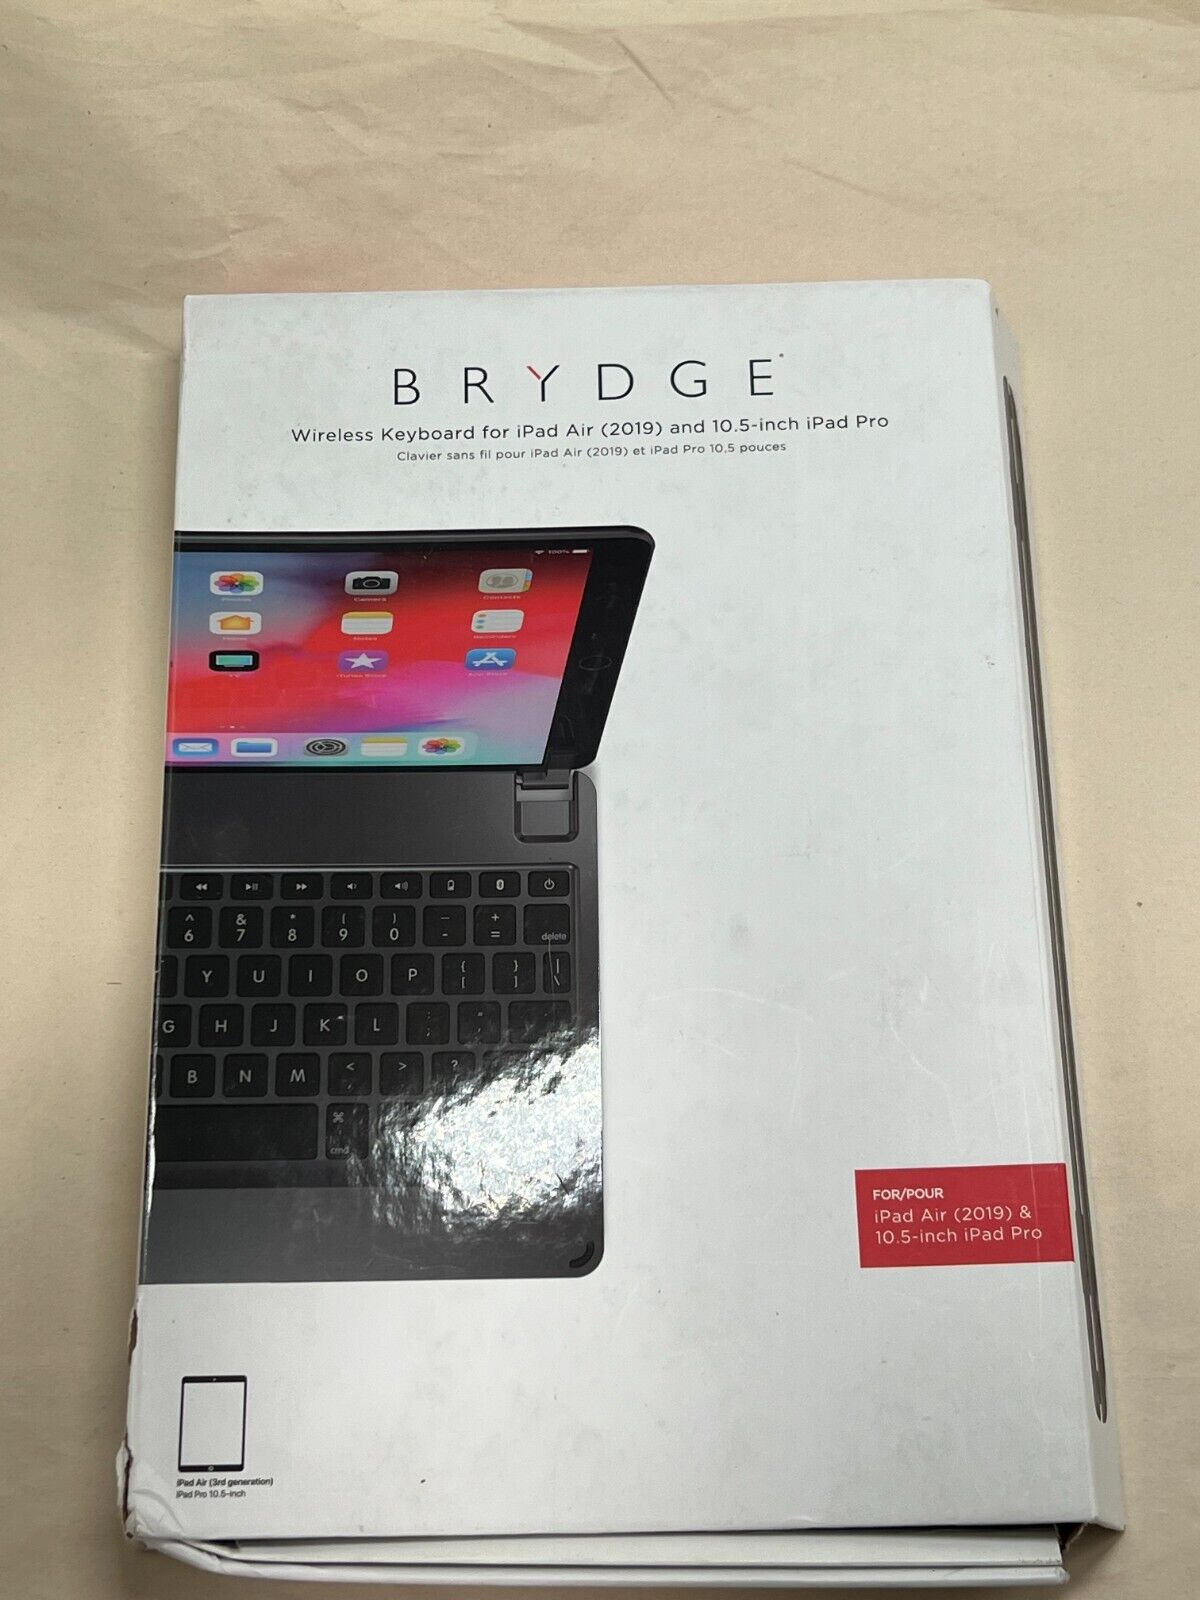 Brydge BRY8002-B Wireless Keyboard for iPad Pro 10.5-inch & iPad Air (2019)